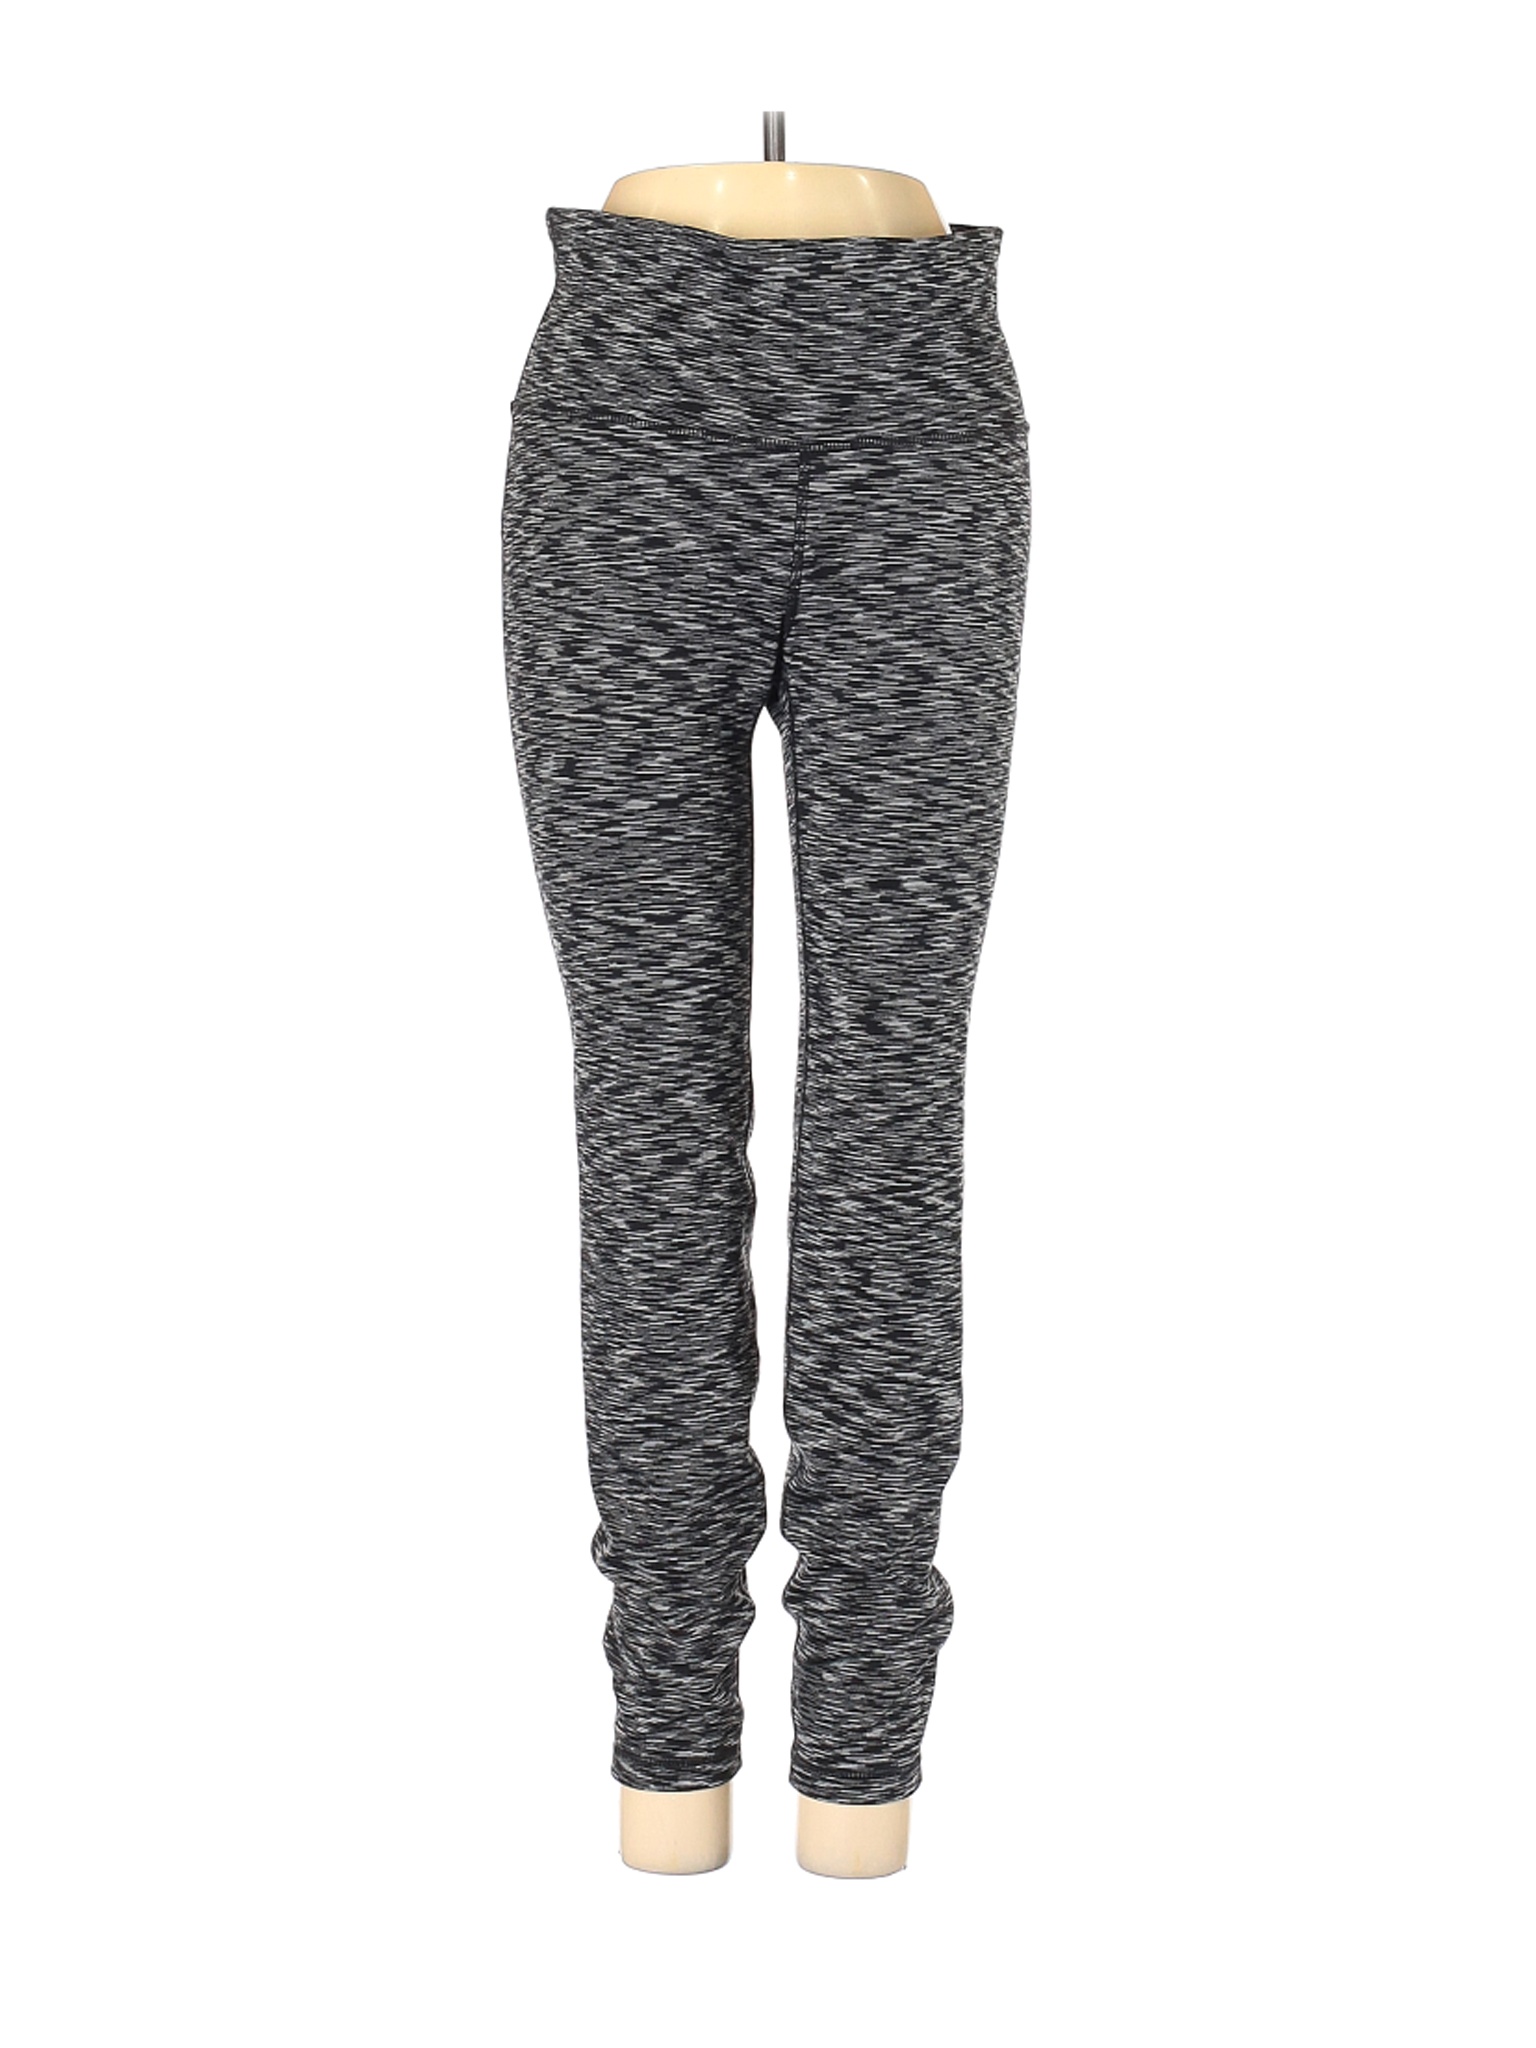 Gap Fit Women Gray Active Pants S | eBay